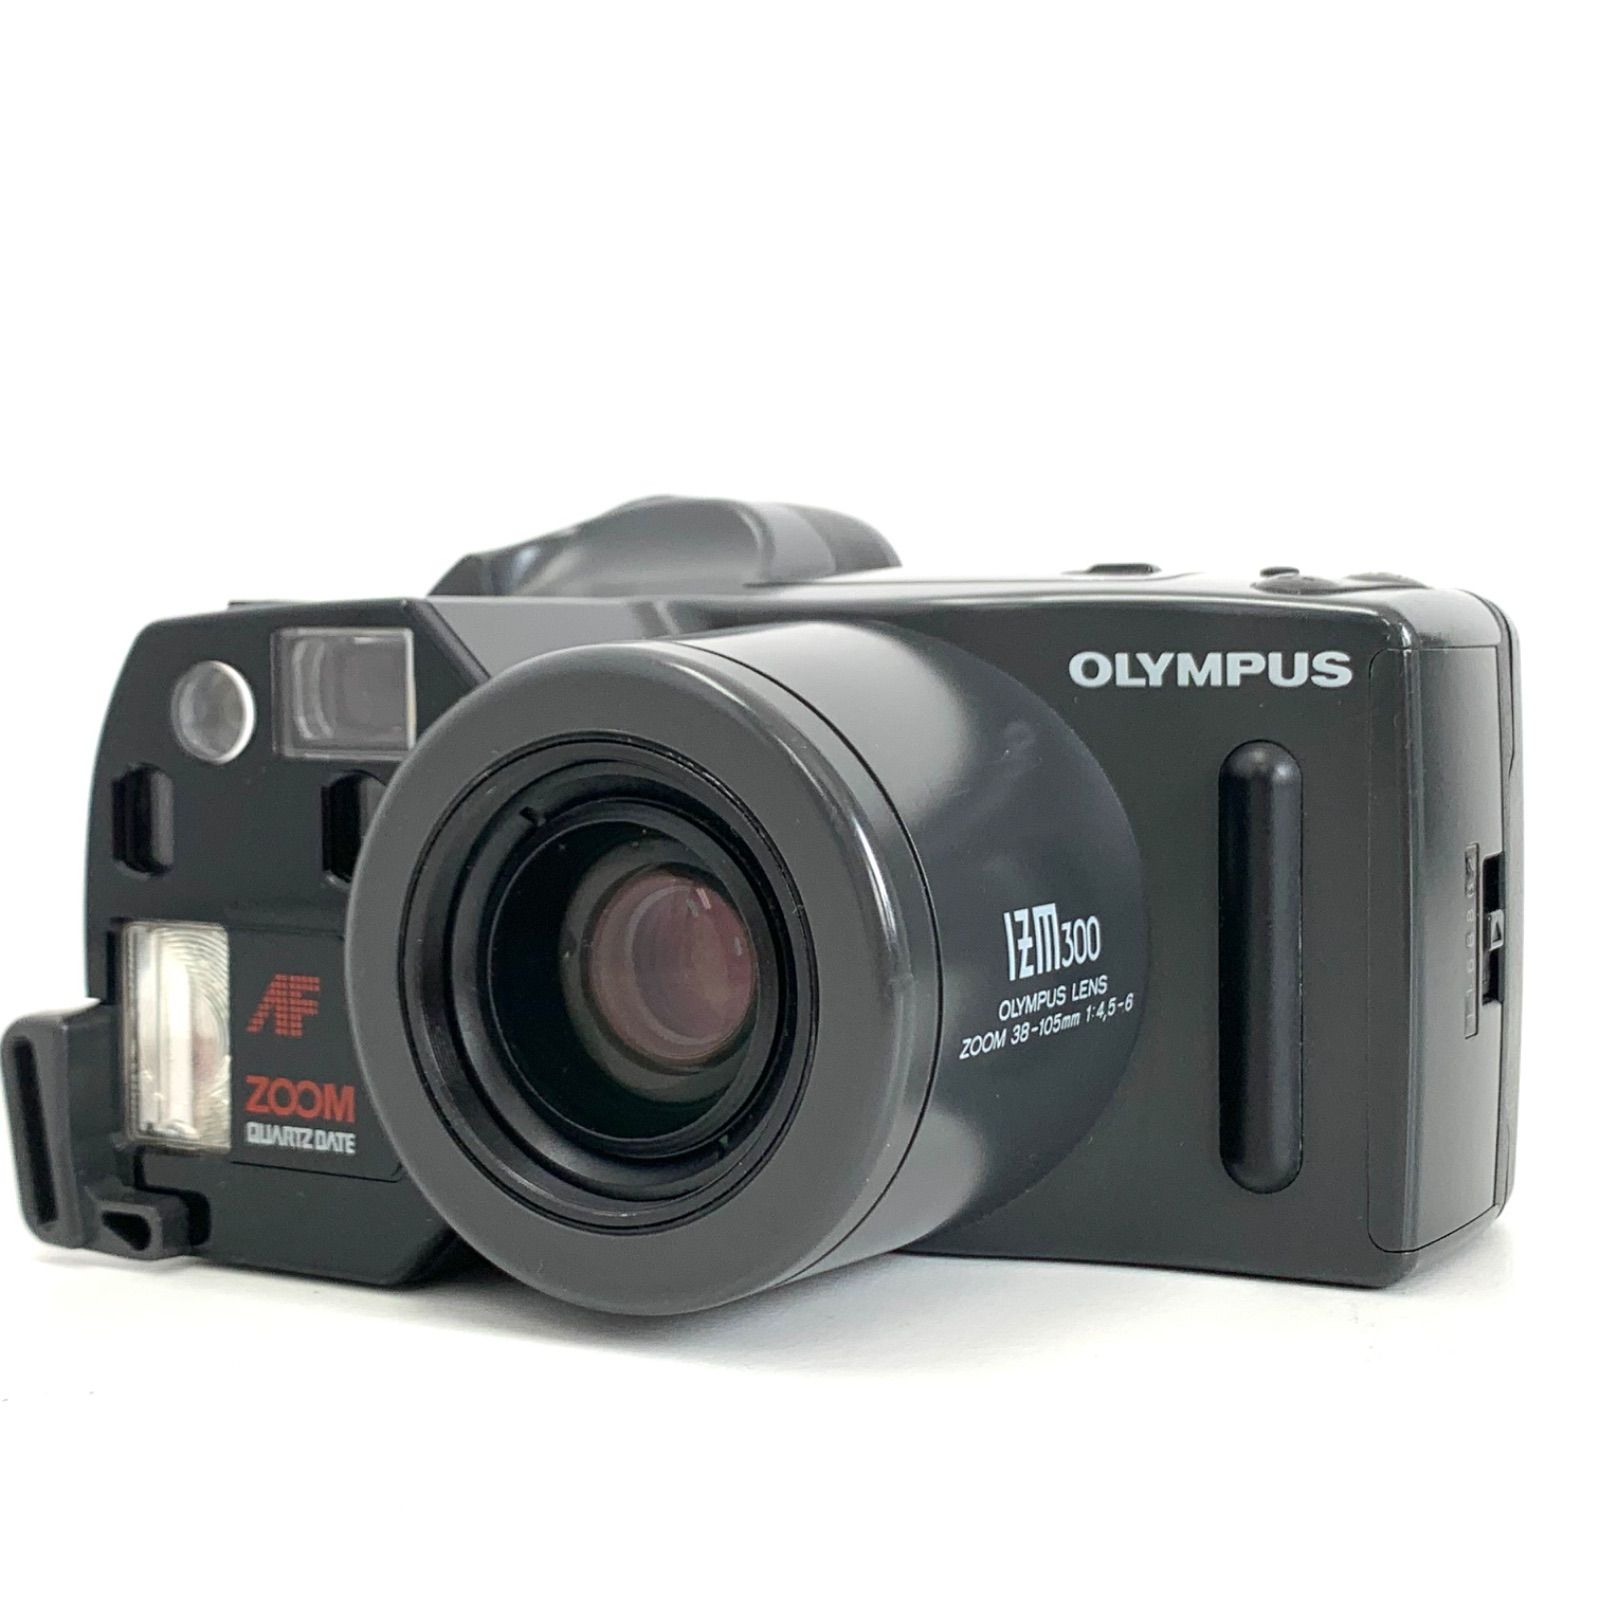 OLYMPUS IZM300 フィルムカメラ - フィルムカメラ